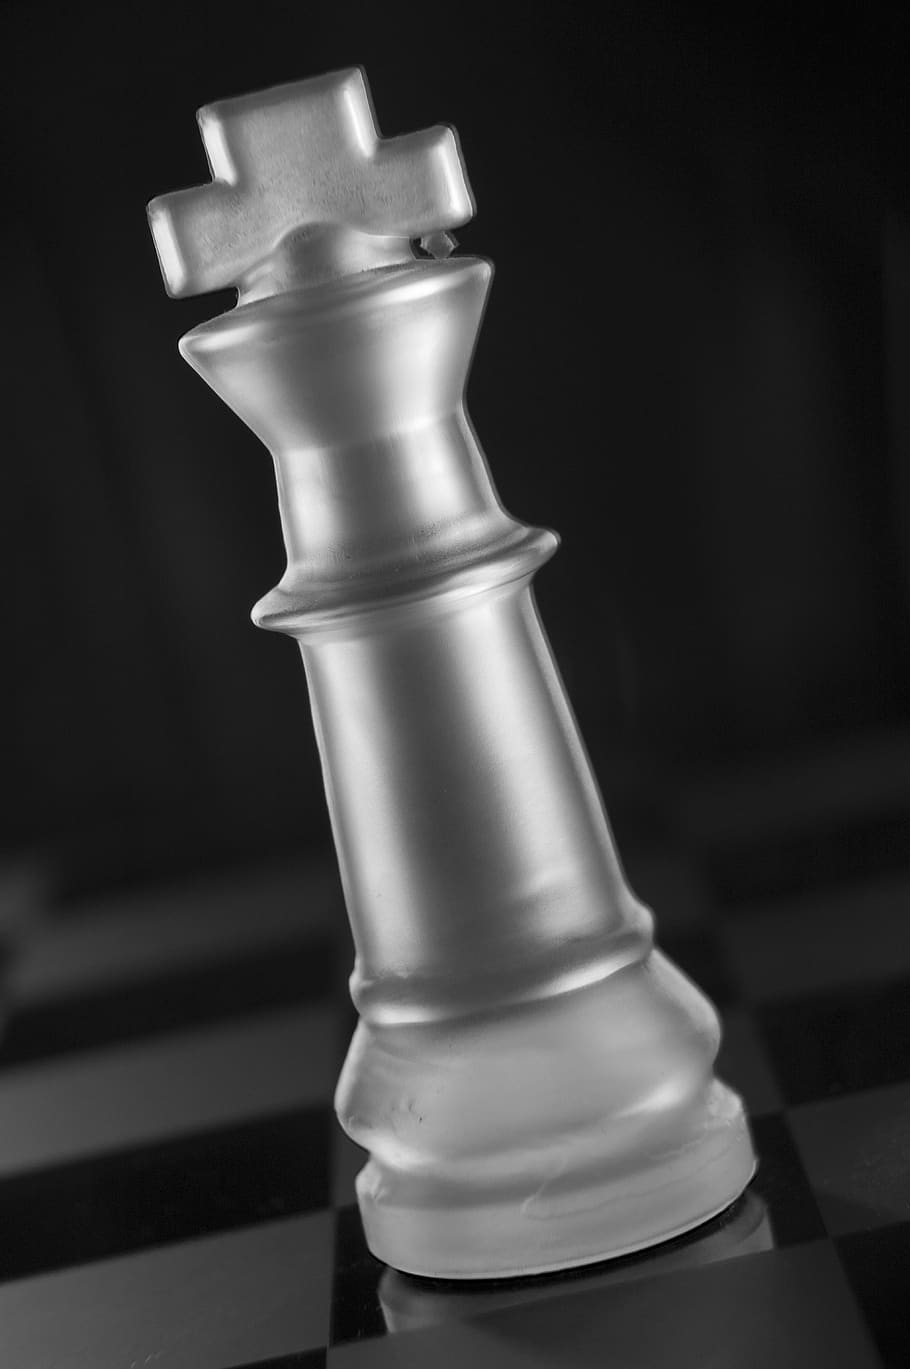 catur, kemenangan, skakmat, raja, papan catur, strategi, mahkota, bidak catur, permainan, papan permainan